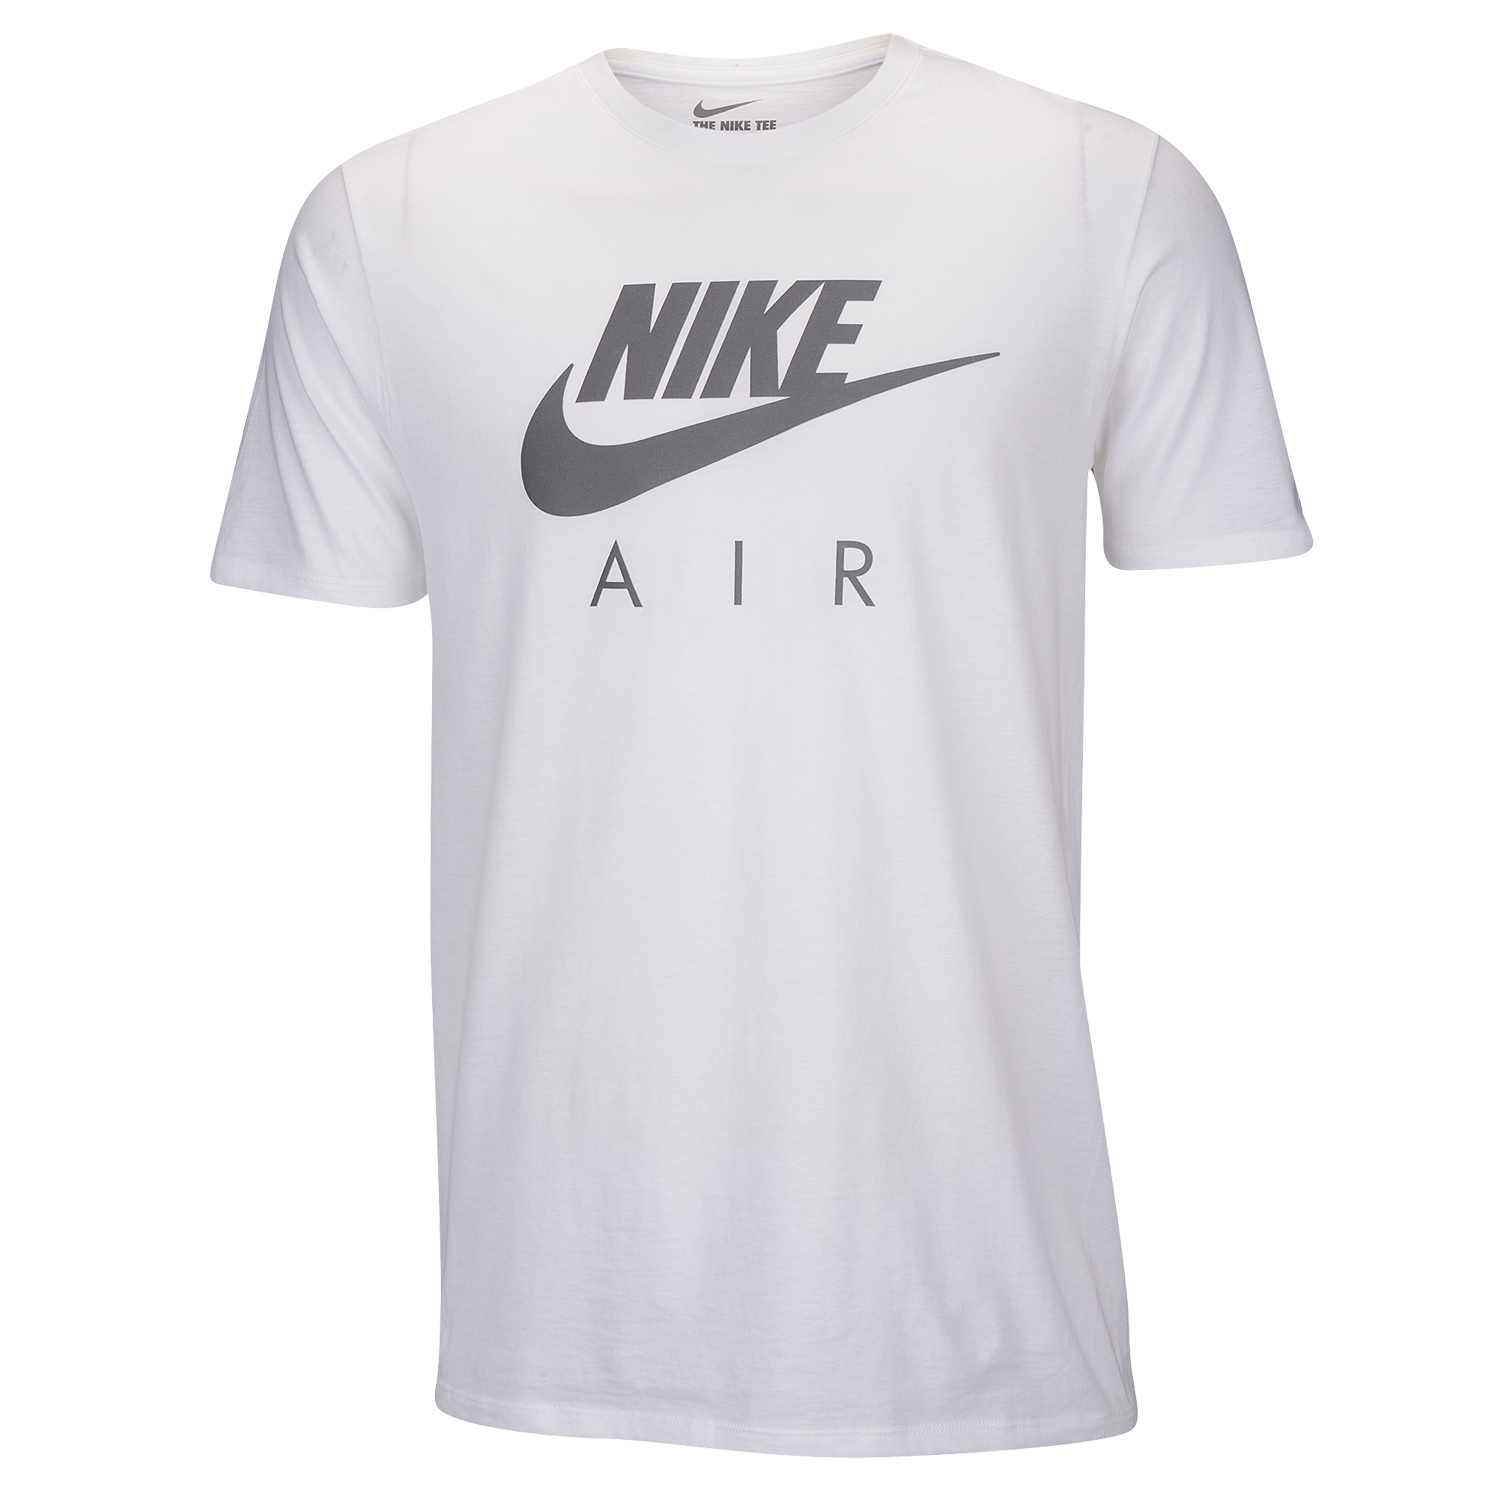 nike-air-t-shirt-white-metallic-silver